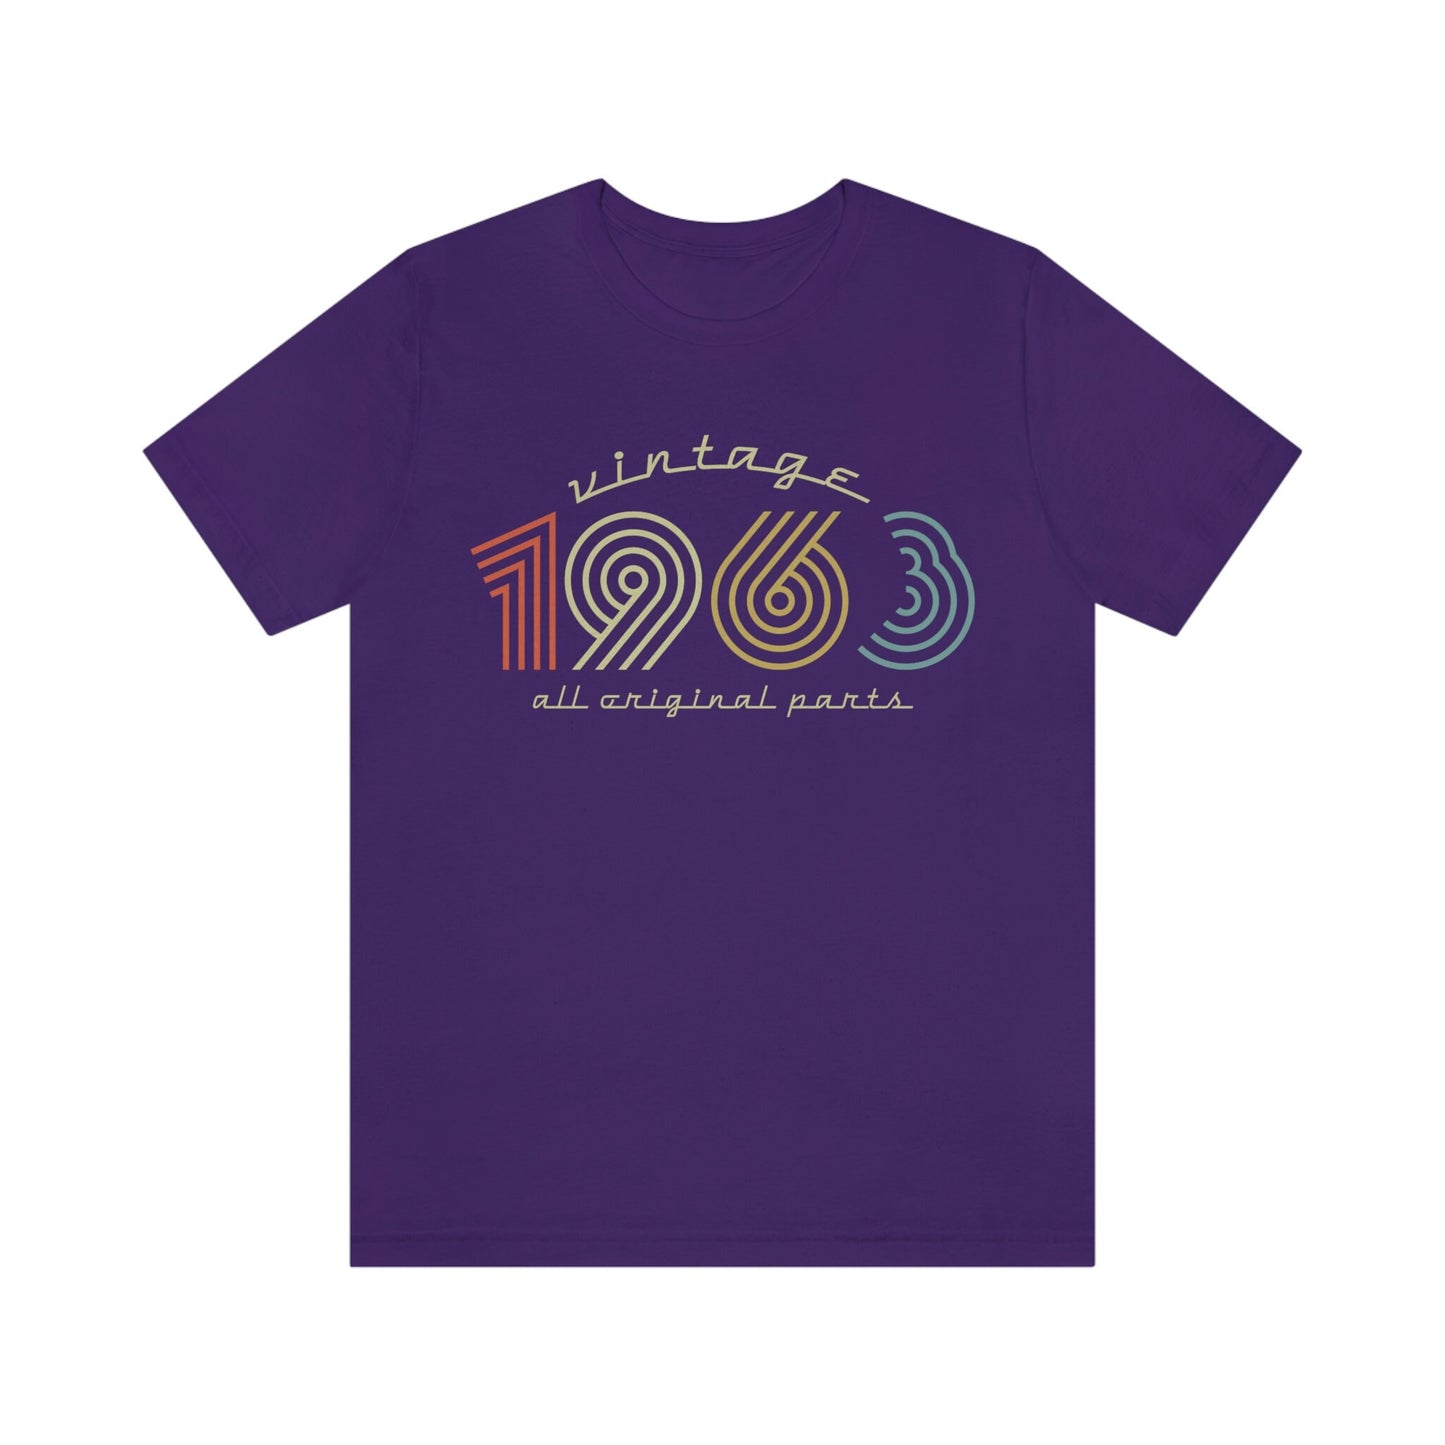 Retro 1963 Birthday Gift T-Shirt for Women or Men - Vintage Born In 1963 T-shirt